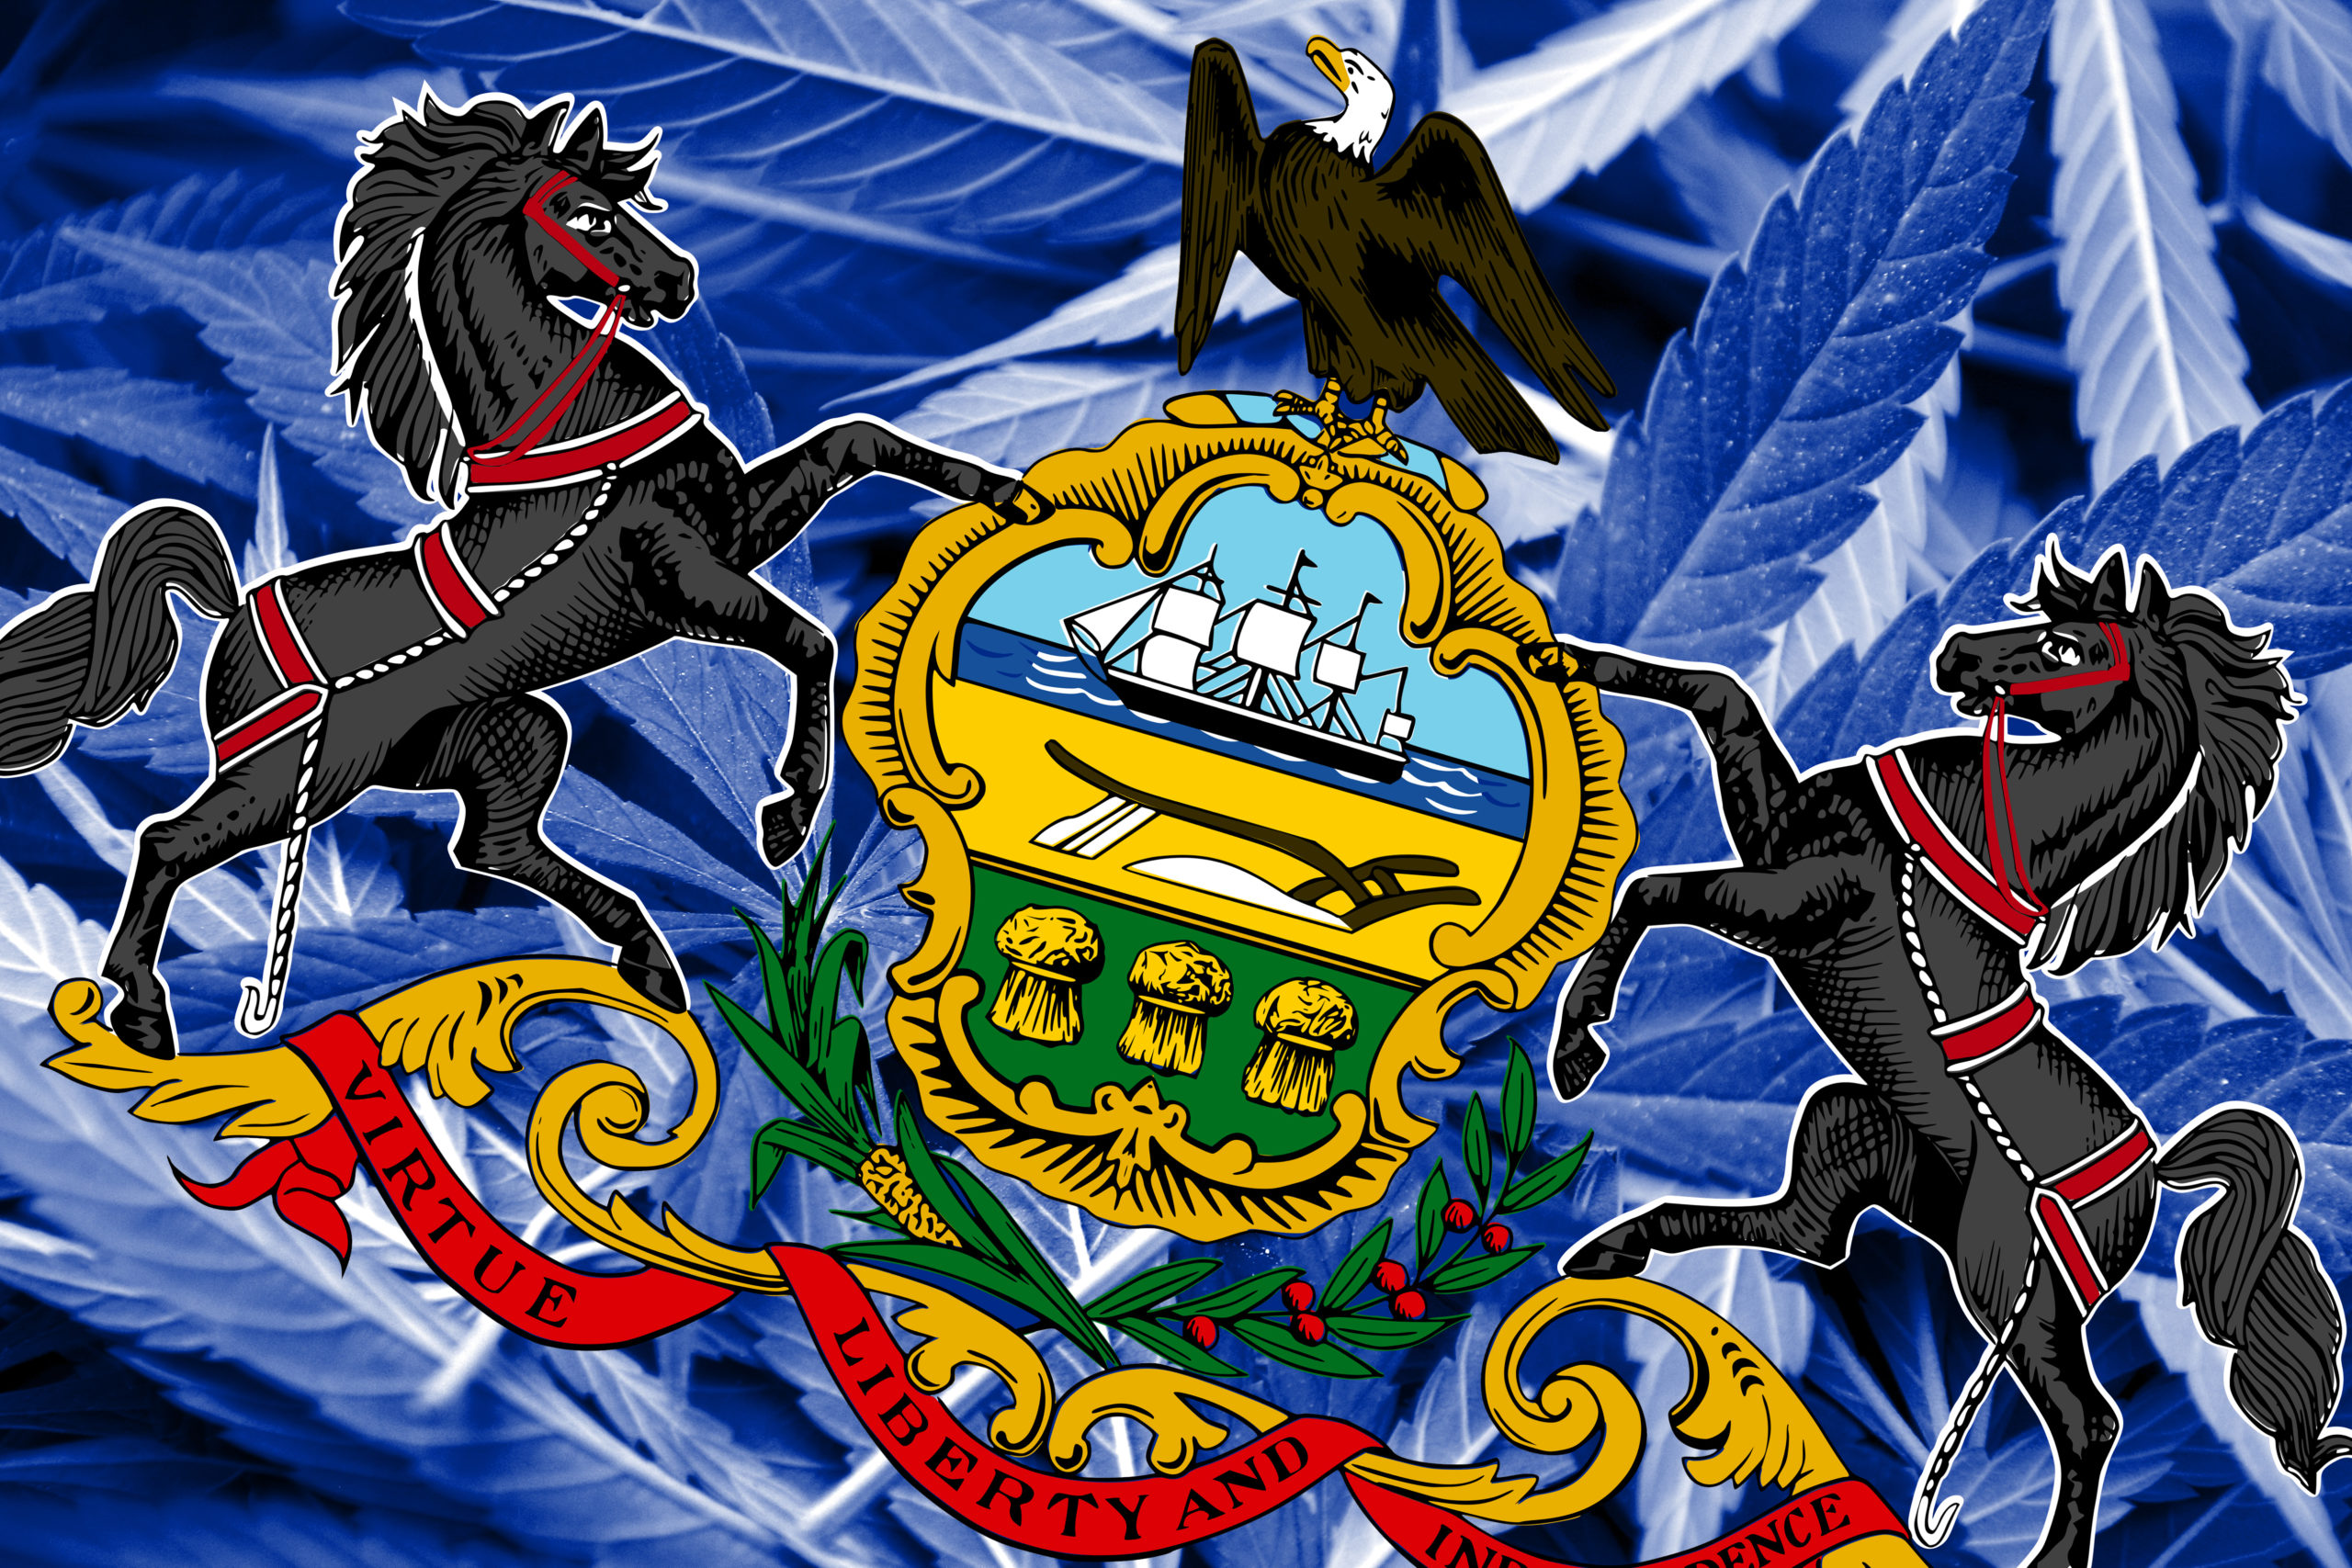 It's Time For Peace Legalize Cannabis Marijuana 5'x3' Flag 